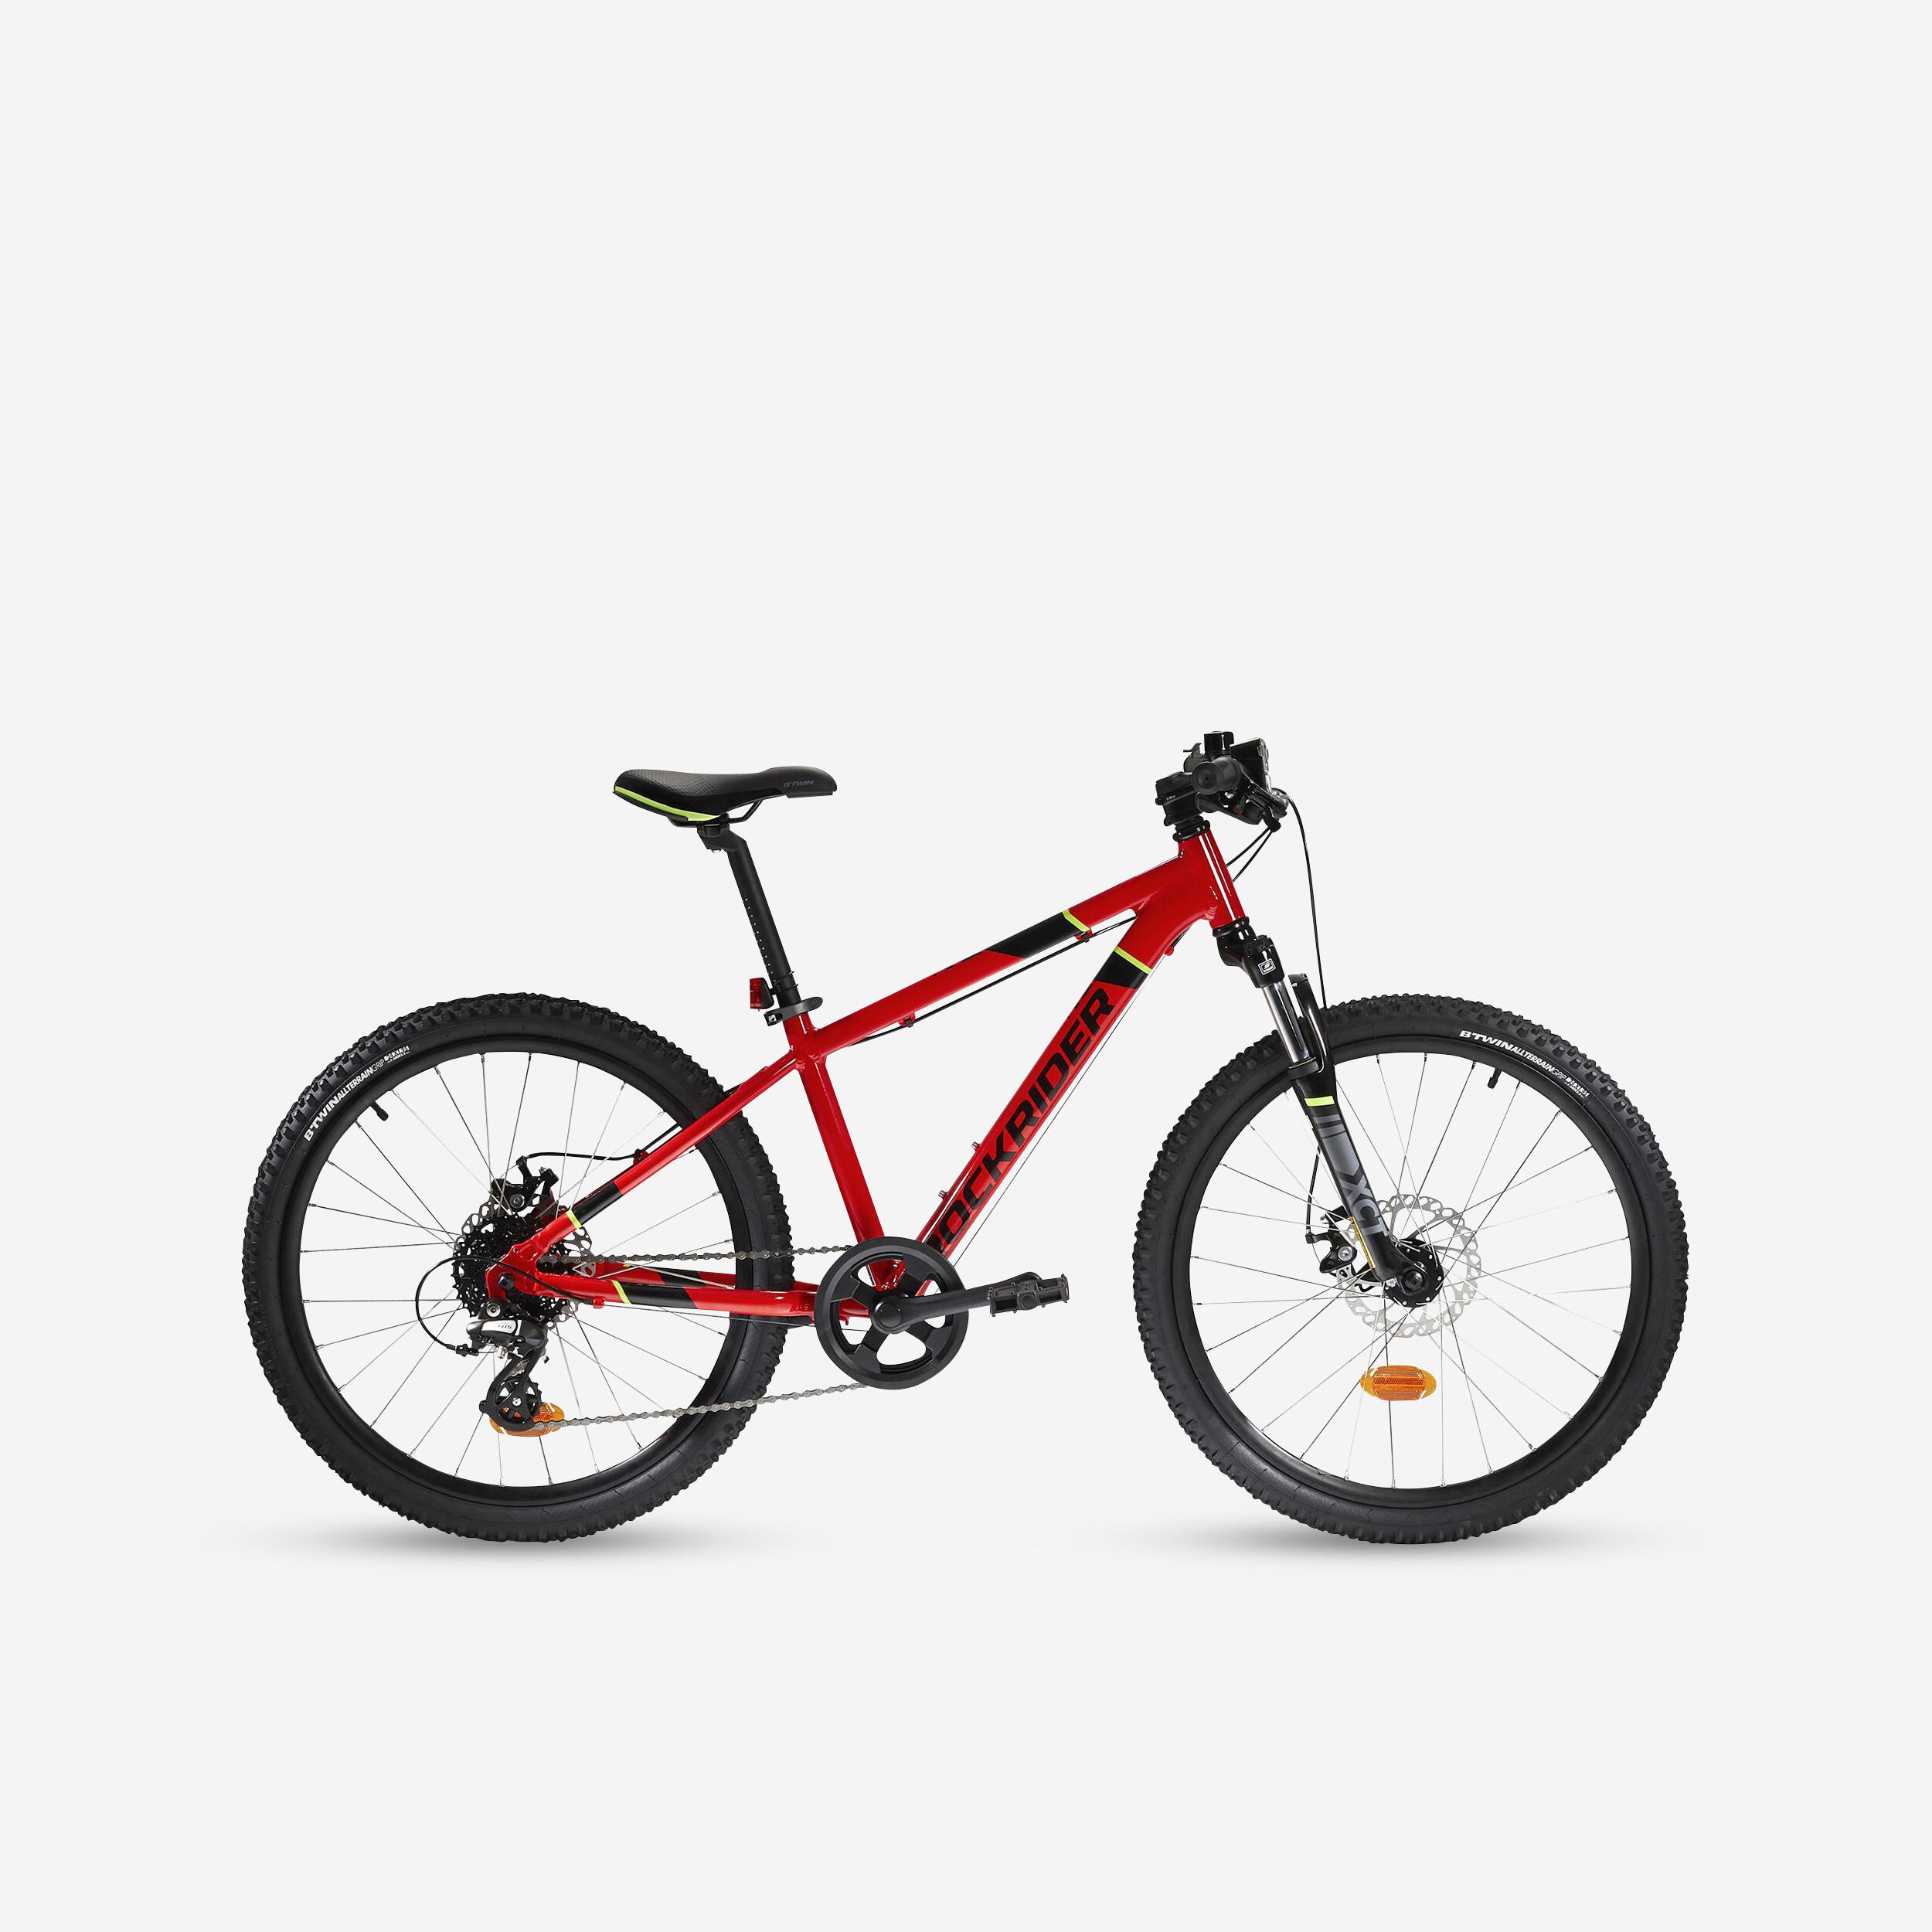 Kids' 24-inch lightweight aluminium mountain bike, red 1/23